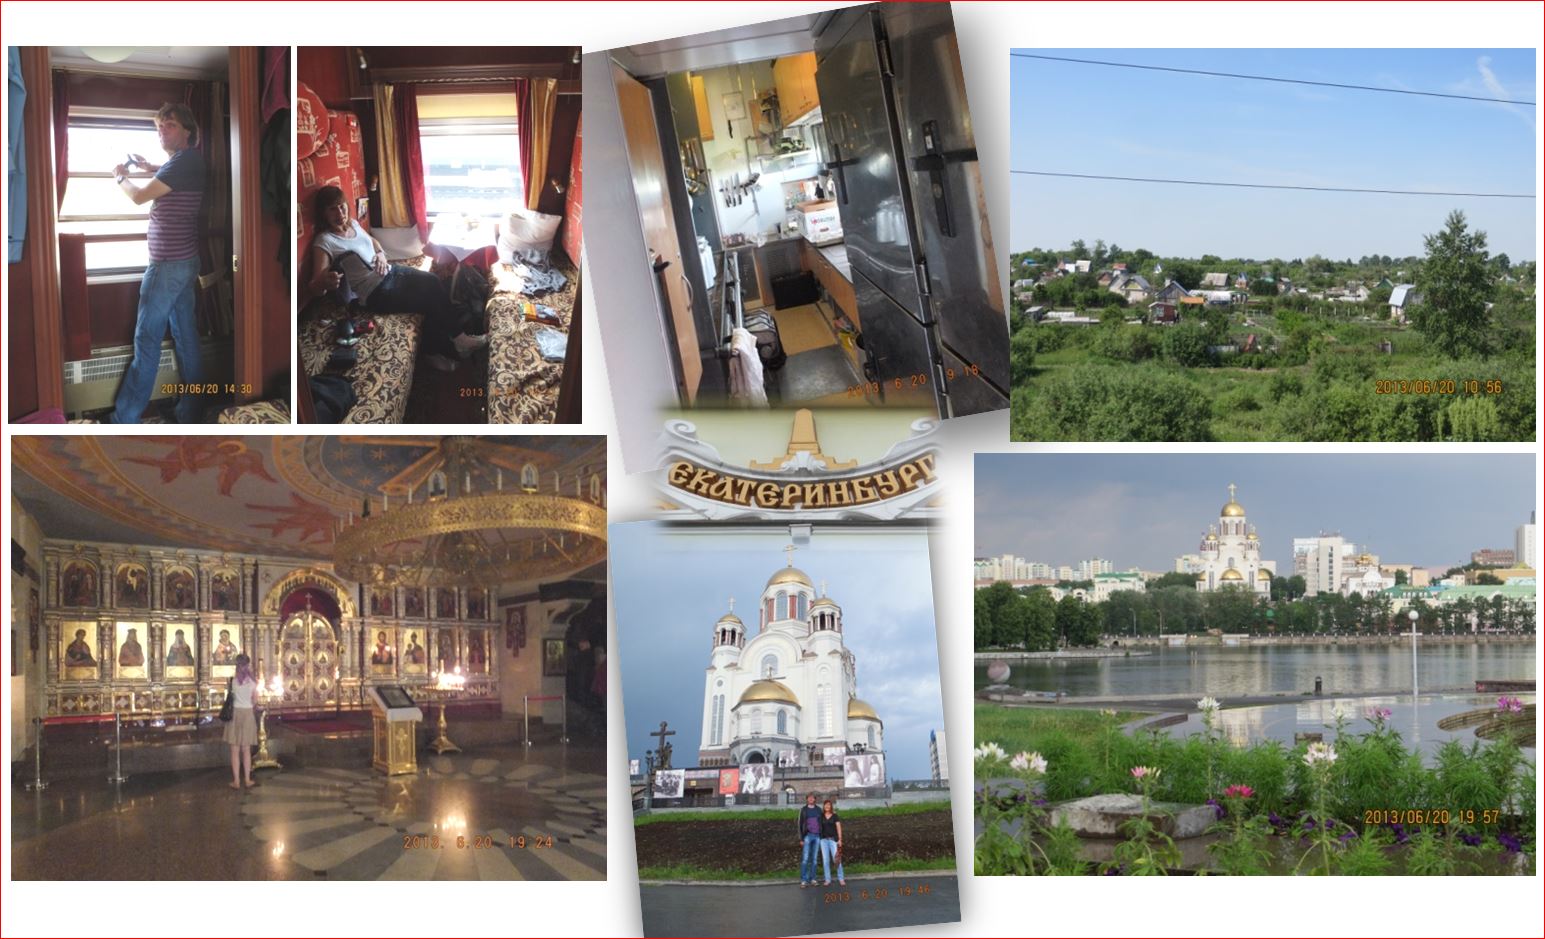 ragg 2013-06-20 - 1120Aweb - Transsib - Novosibirsk - Tag 13 - S16 B02